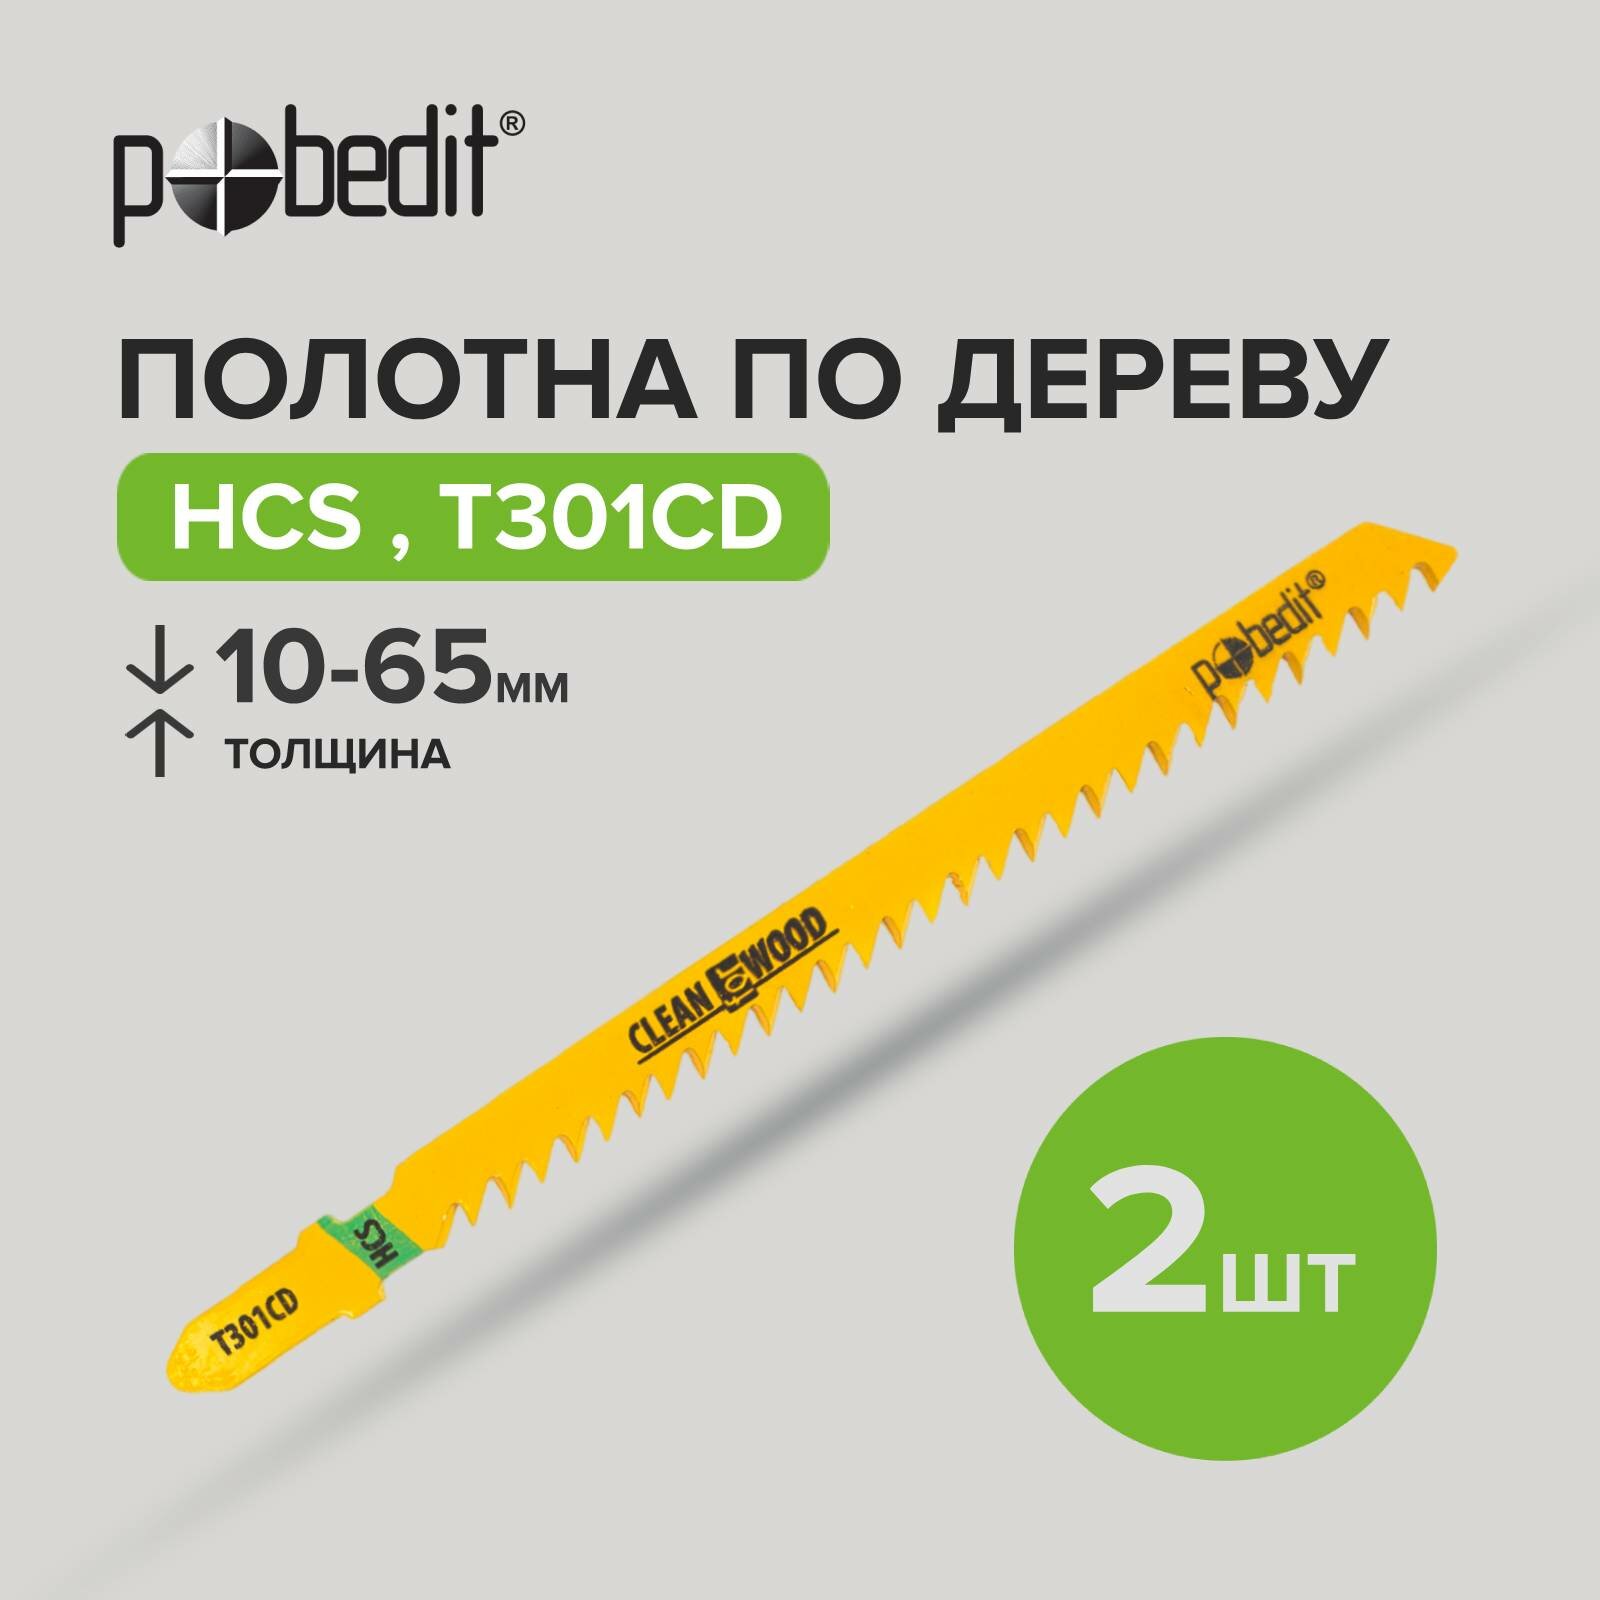 Пилки для лобзика по дереву T301CD HCS 2 шт, Pobedit